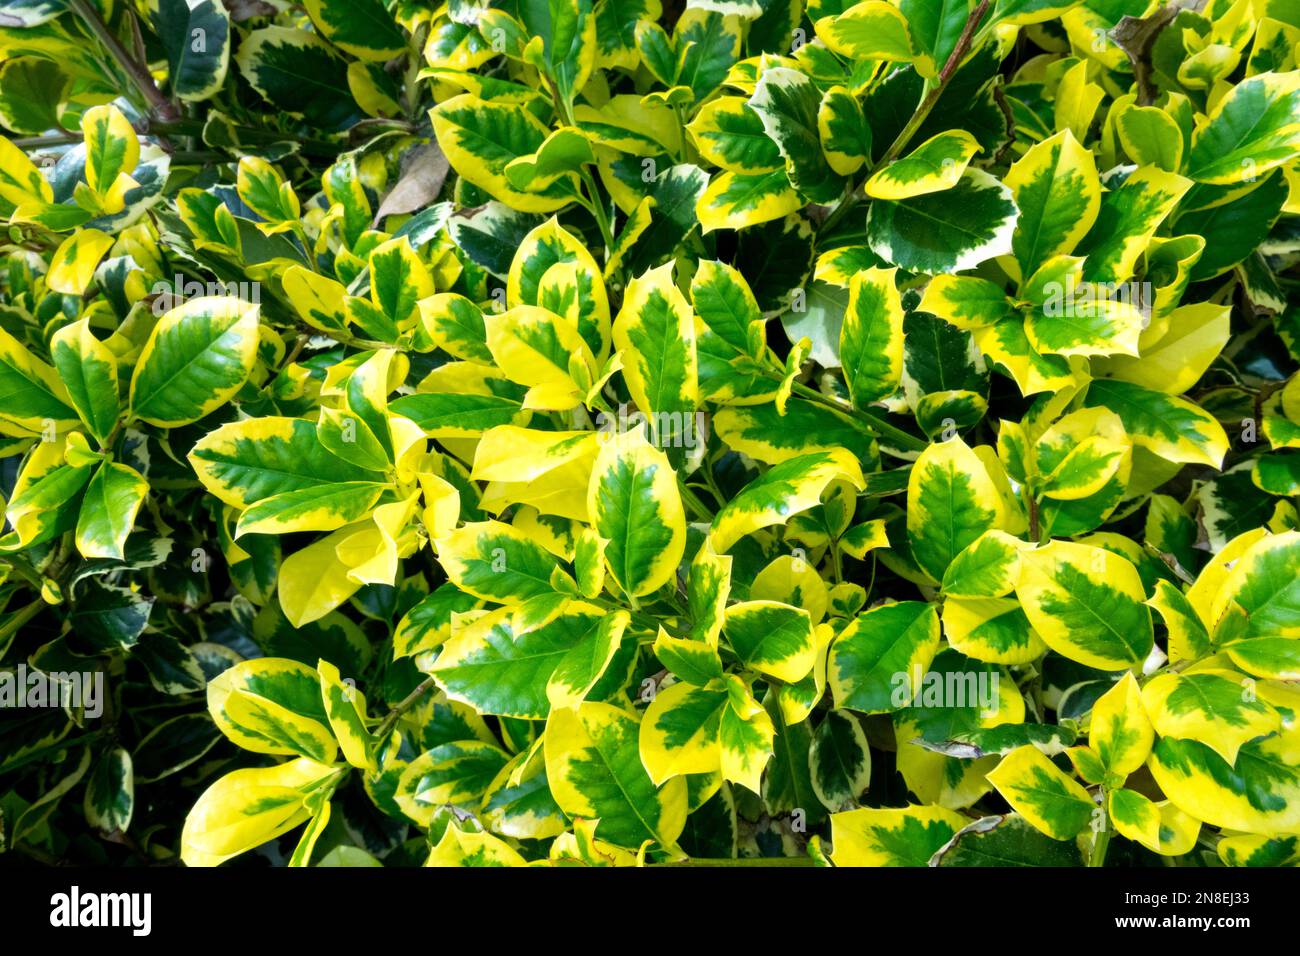 Altaclara Holly, Ilex altaclarensis 'Golden 'King', Holly Ilex, Variegated, Leaves, Yellow, Shrub, Ilex 'Golden King', Evergreen, Plant Stock Photo